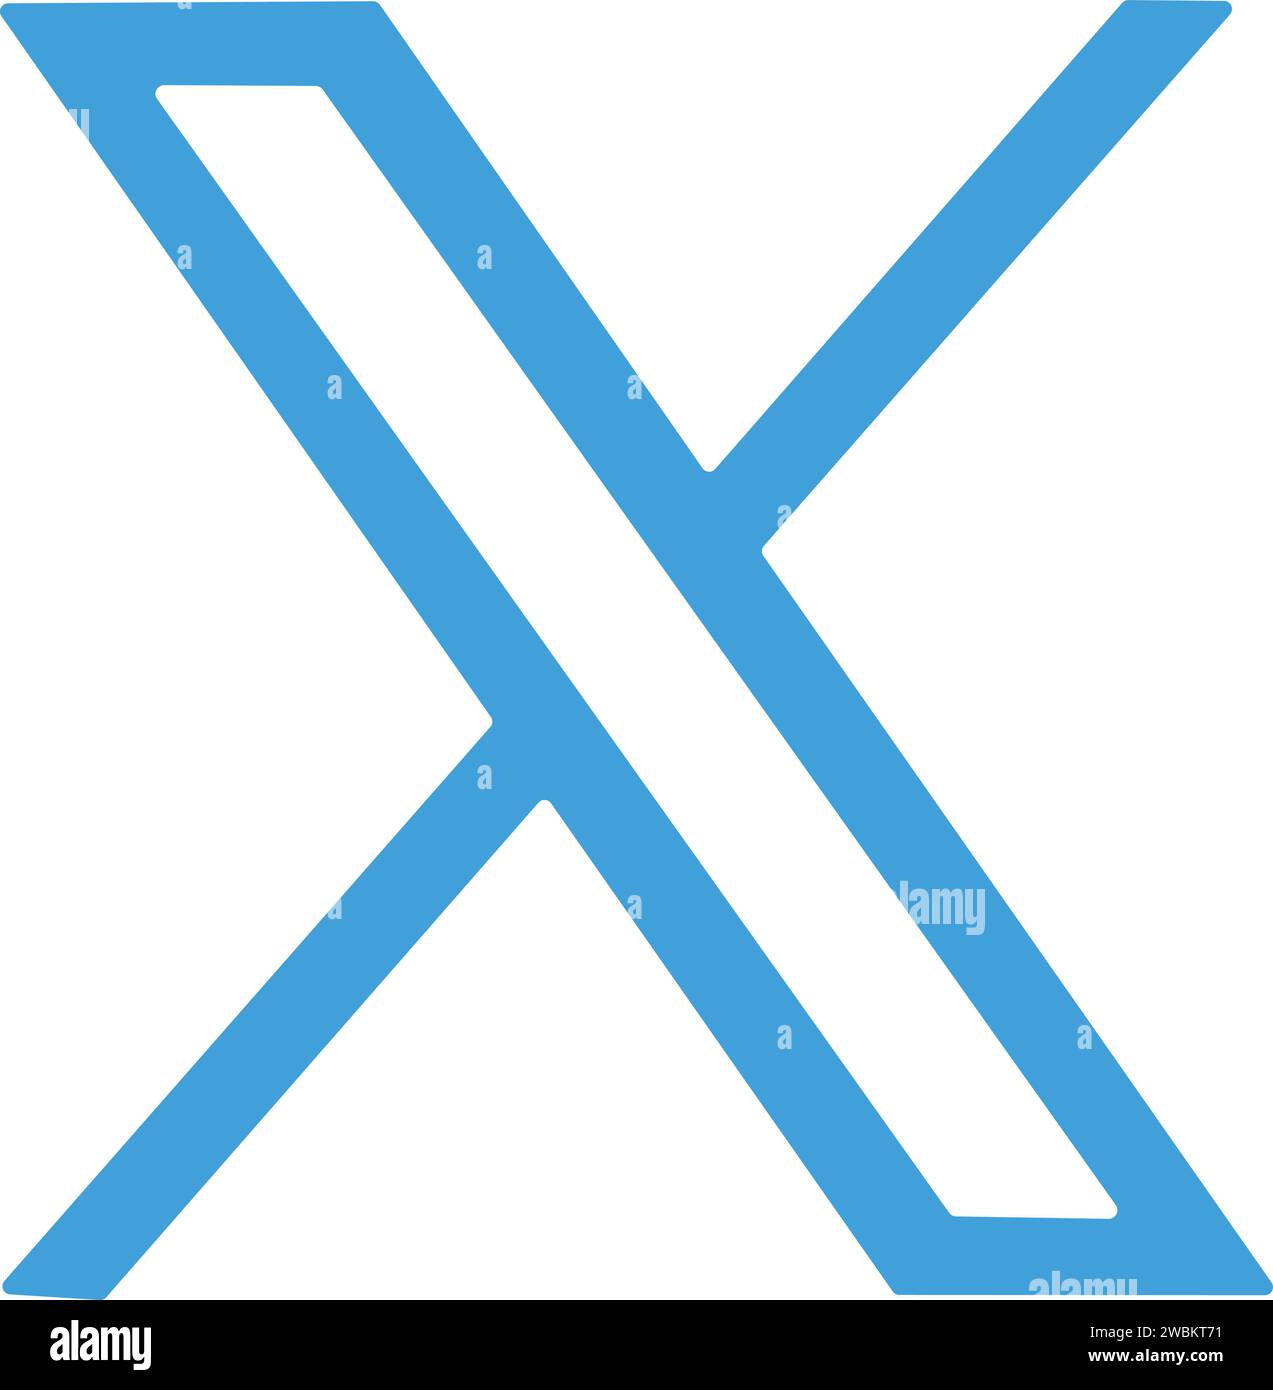 Twitter new x logo . Twitter icons. Twitter X logo . social media app symbol Vector illustration Stock Vector